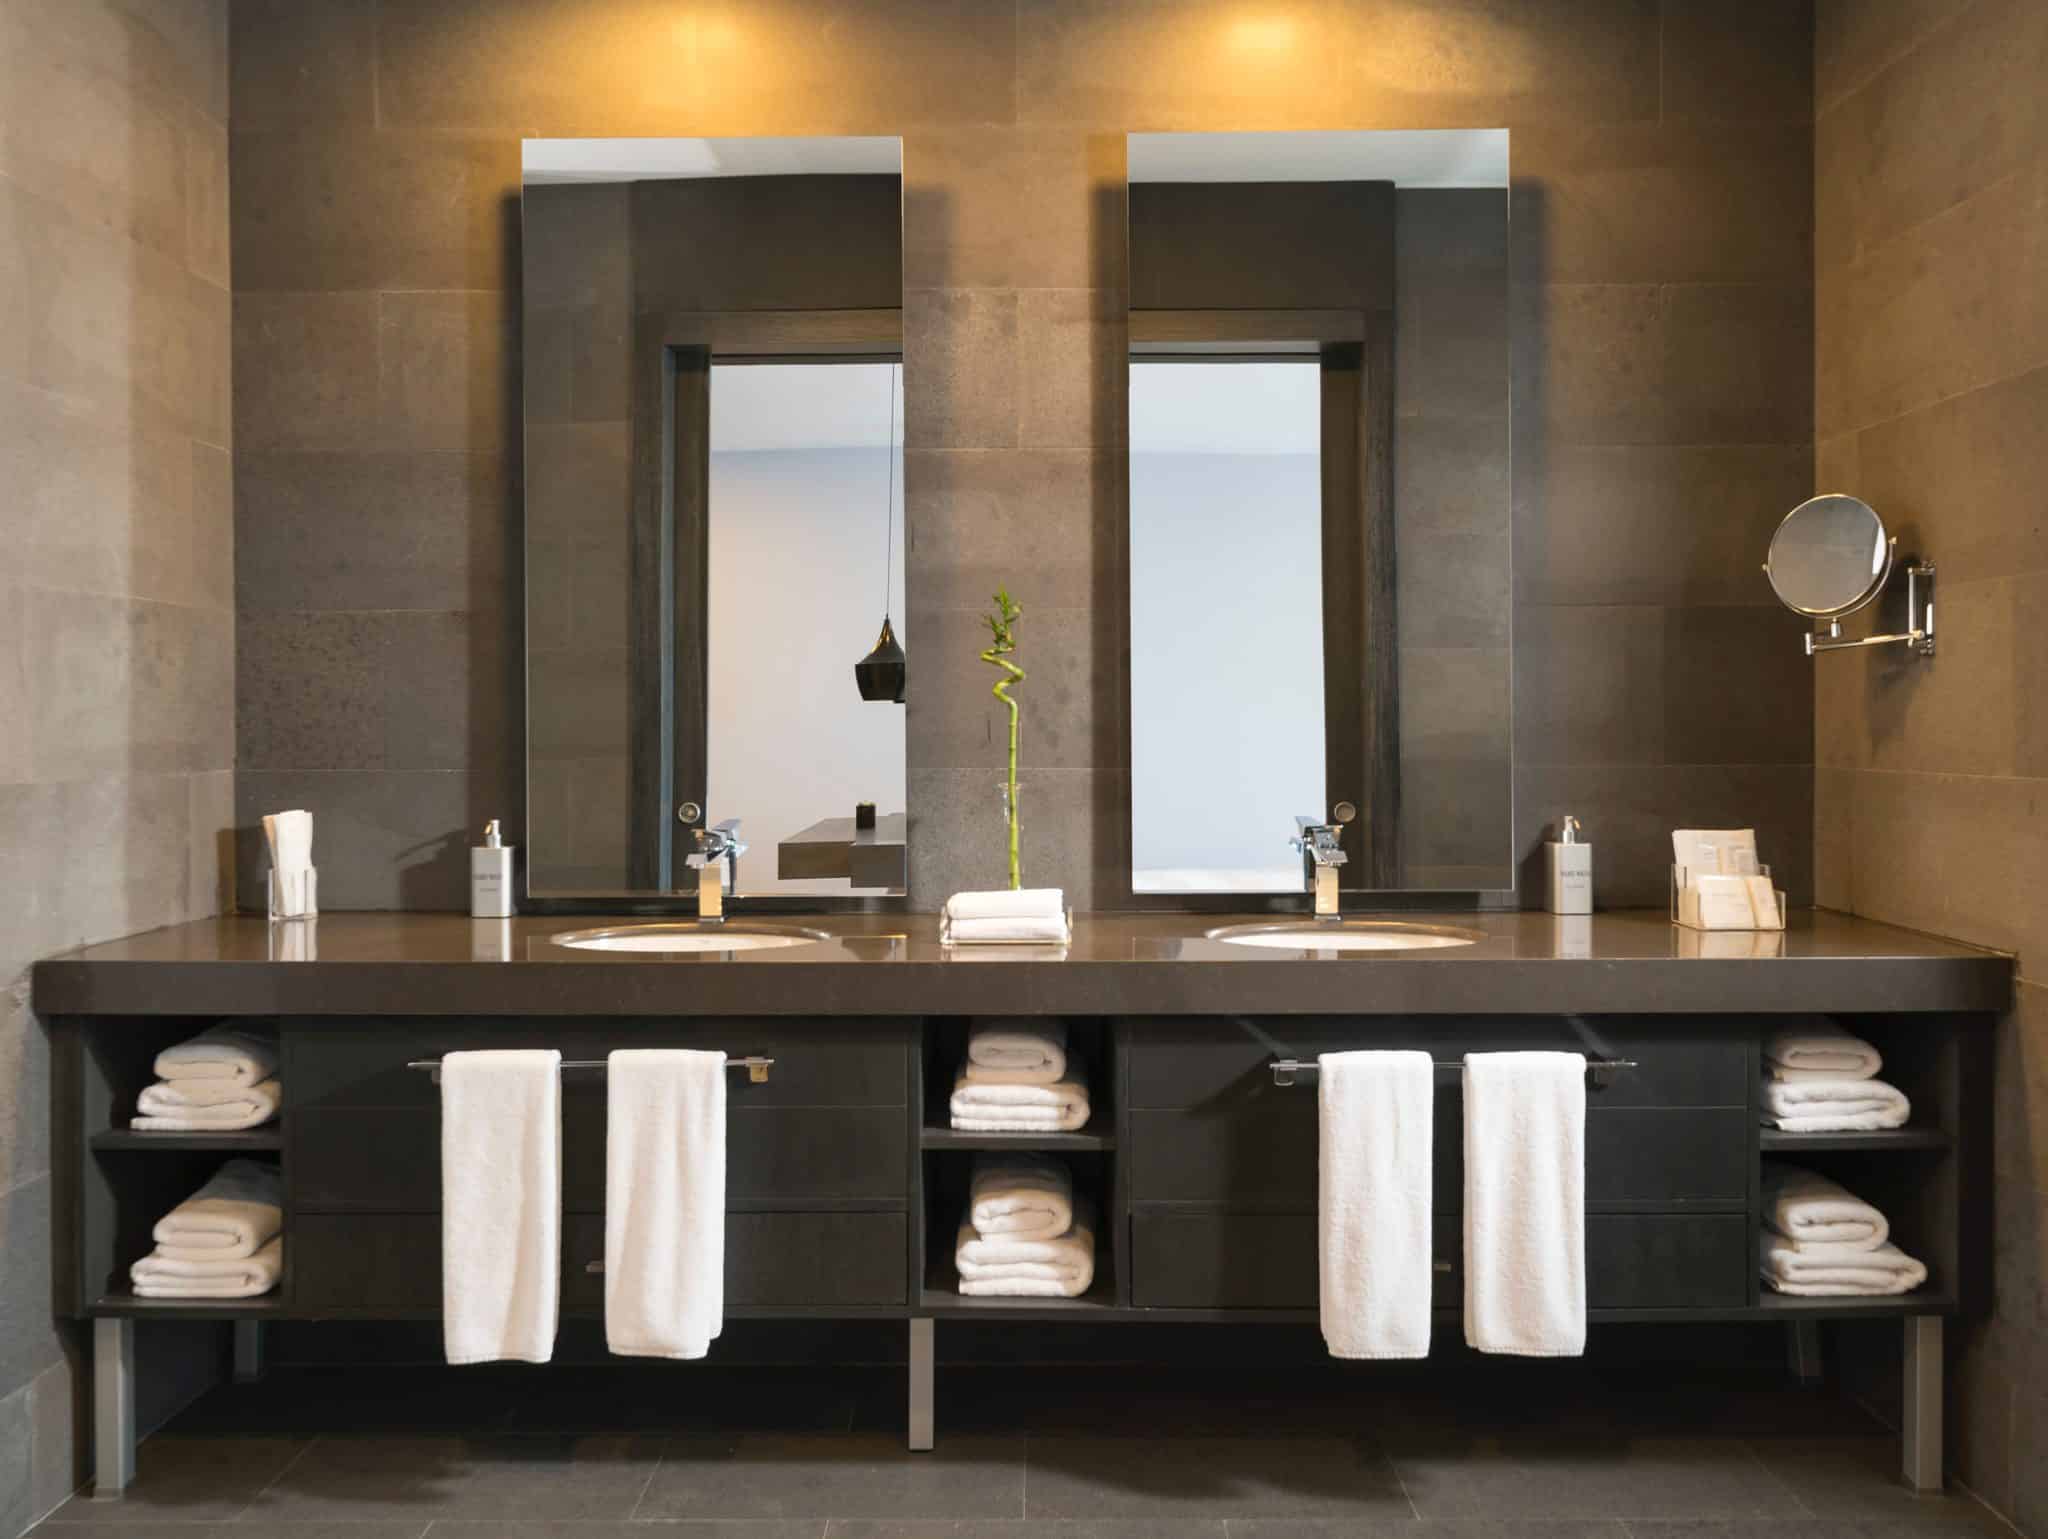 Architecture bath towels bathroom 2507016